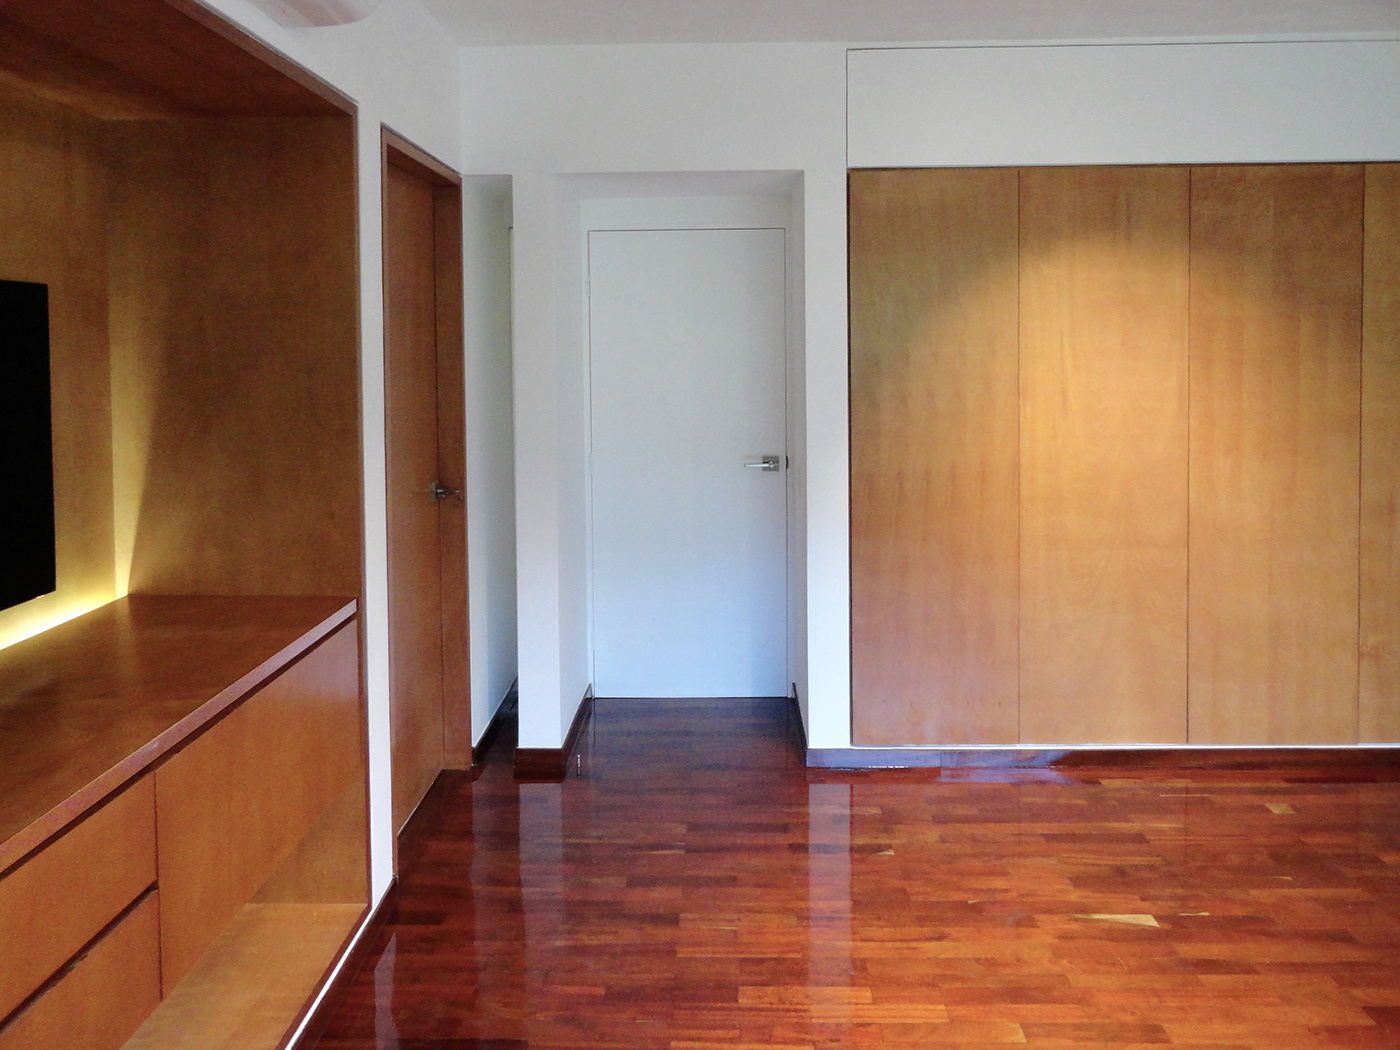 renovation apartment minimal Minimalism kitchen bathroom Marble caracas venezuela